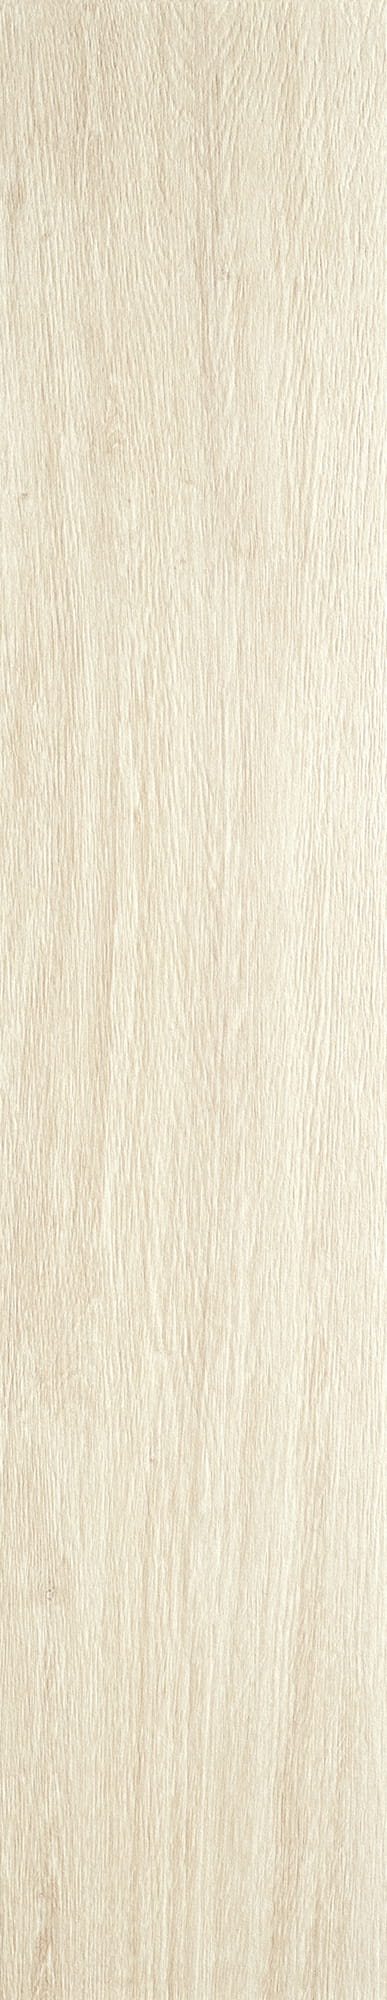 Timber White 20x100